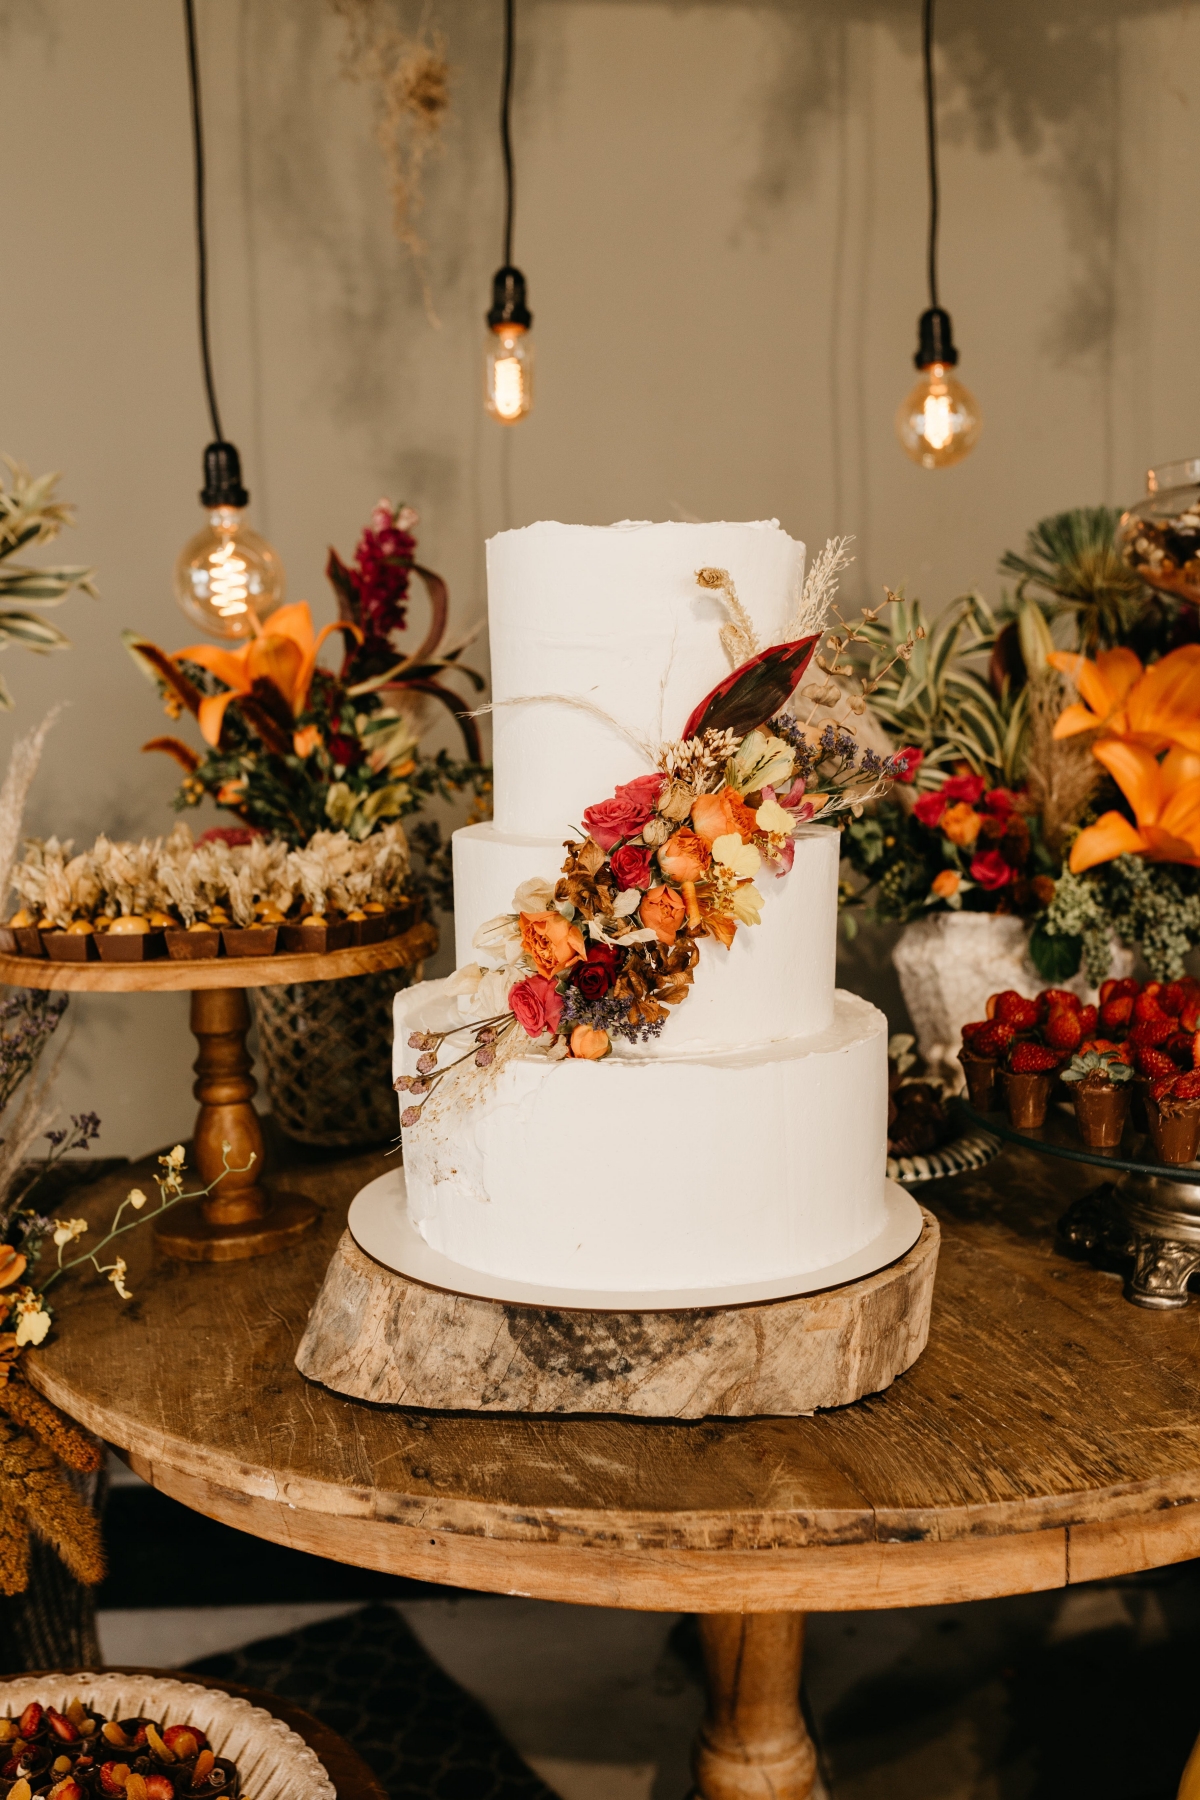 Naked Wedding Cake: A Minimalistic Option for Modern Couples